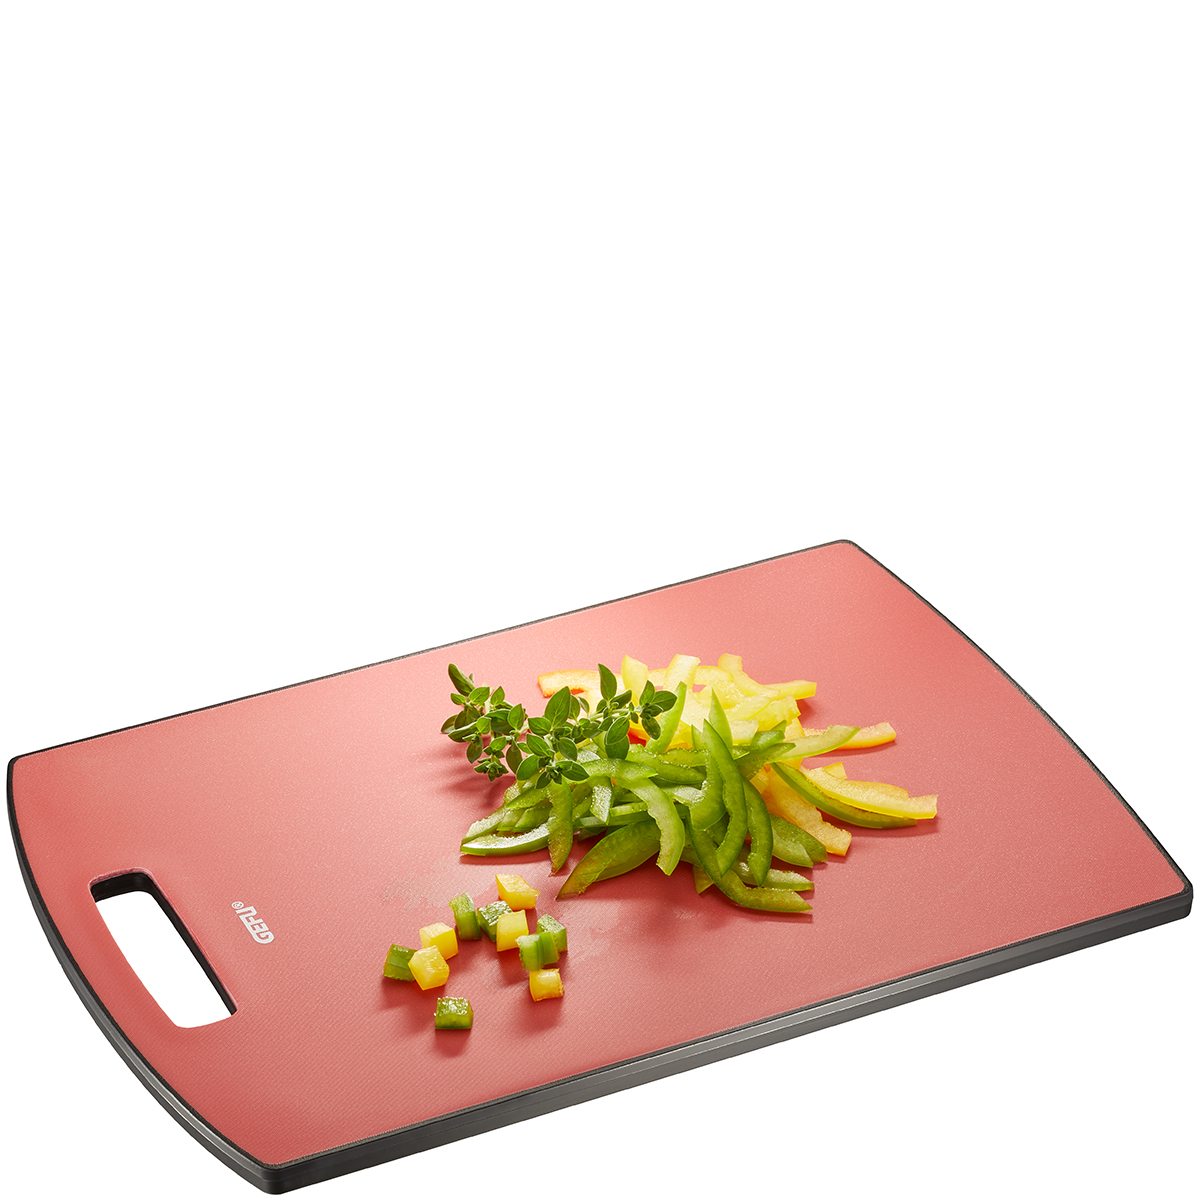 Cutting board LEVORO, raspberry red